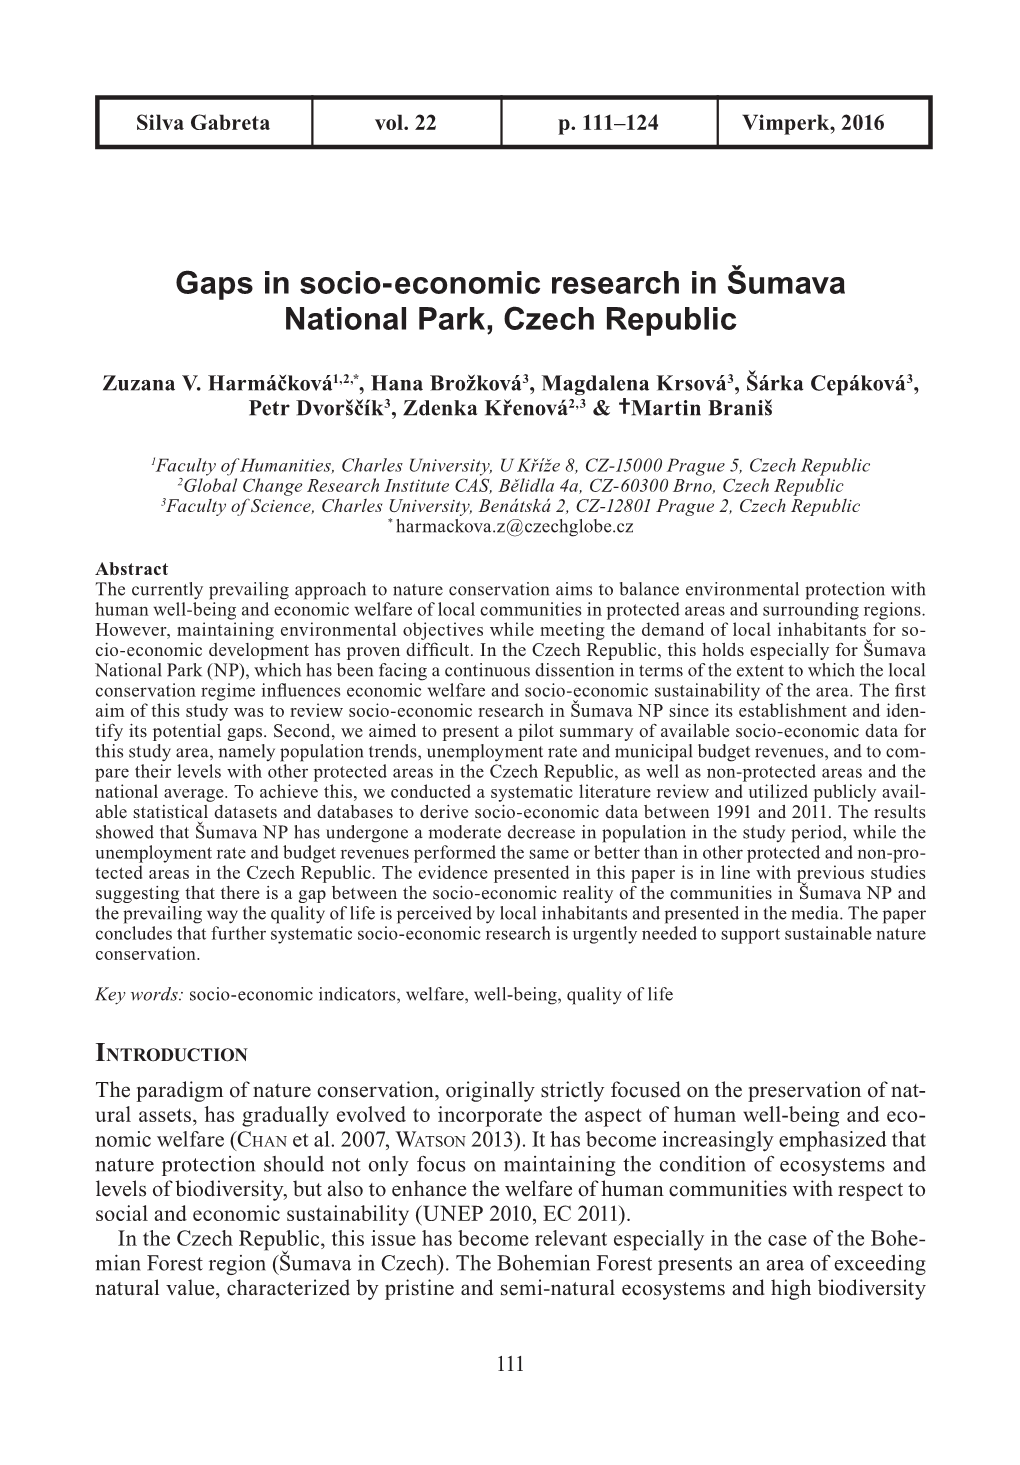 Gaps in Socio-Economic Research in Šumava National Park, Czech Republic